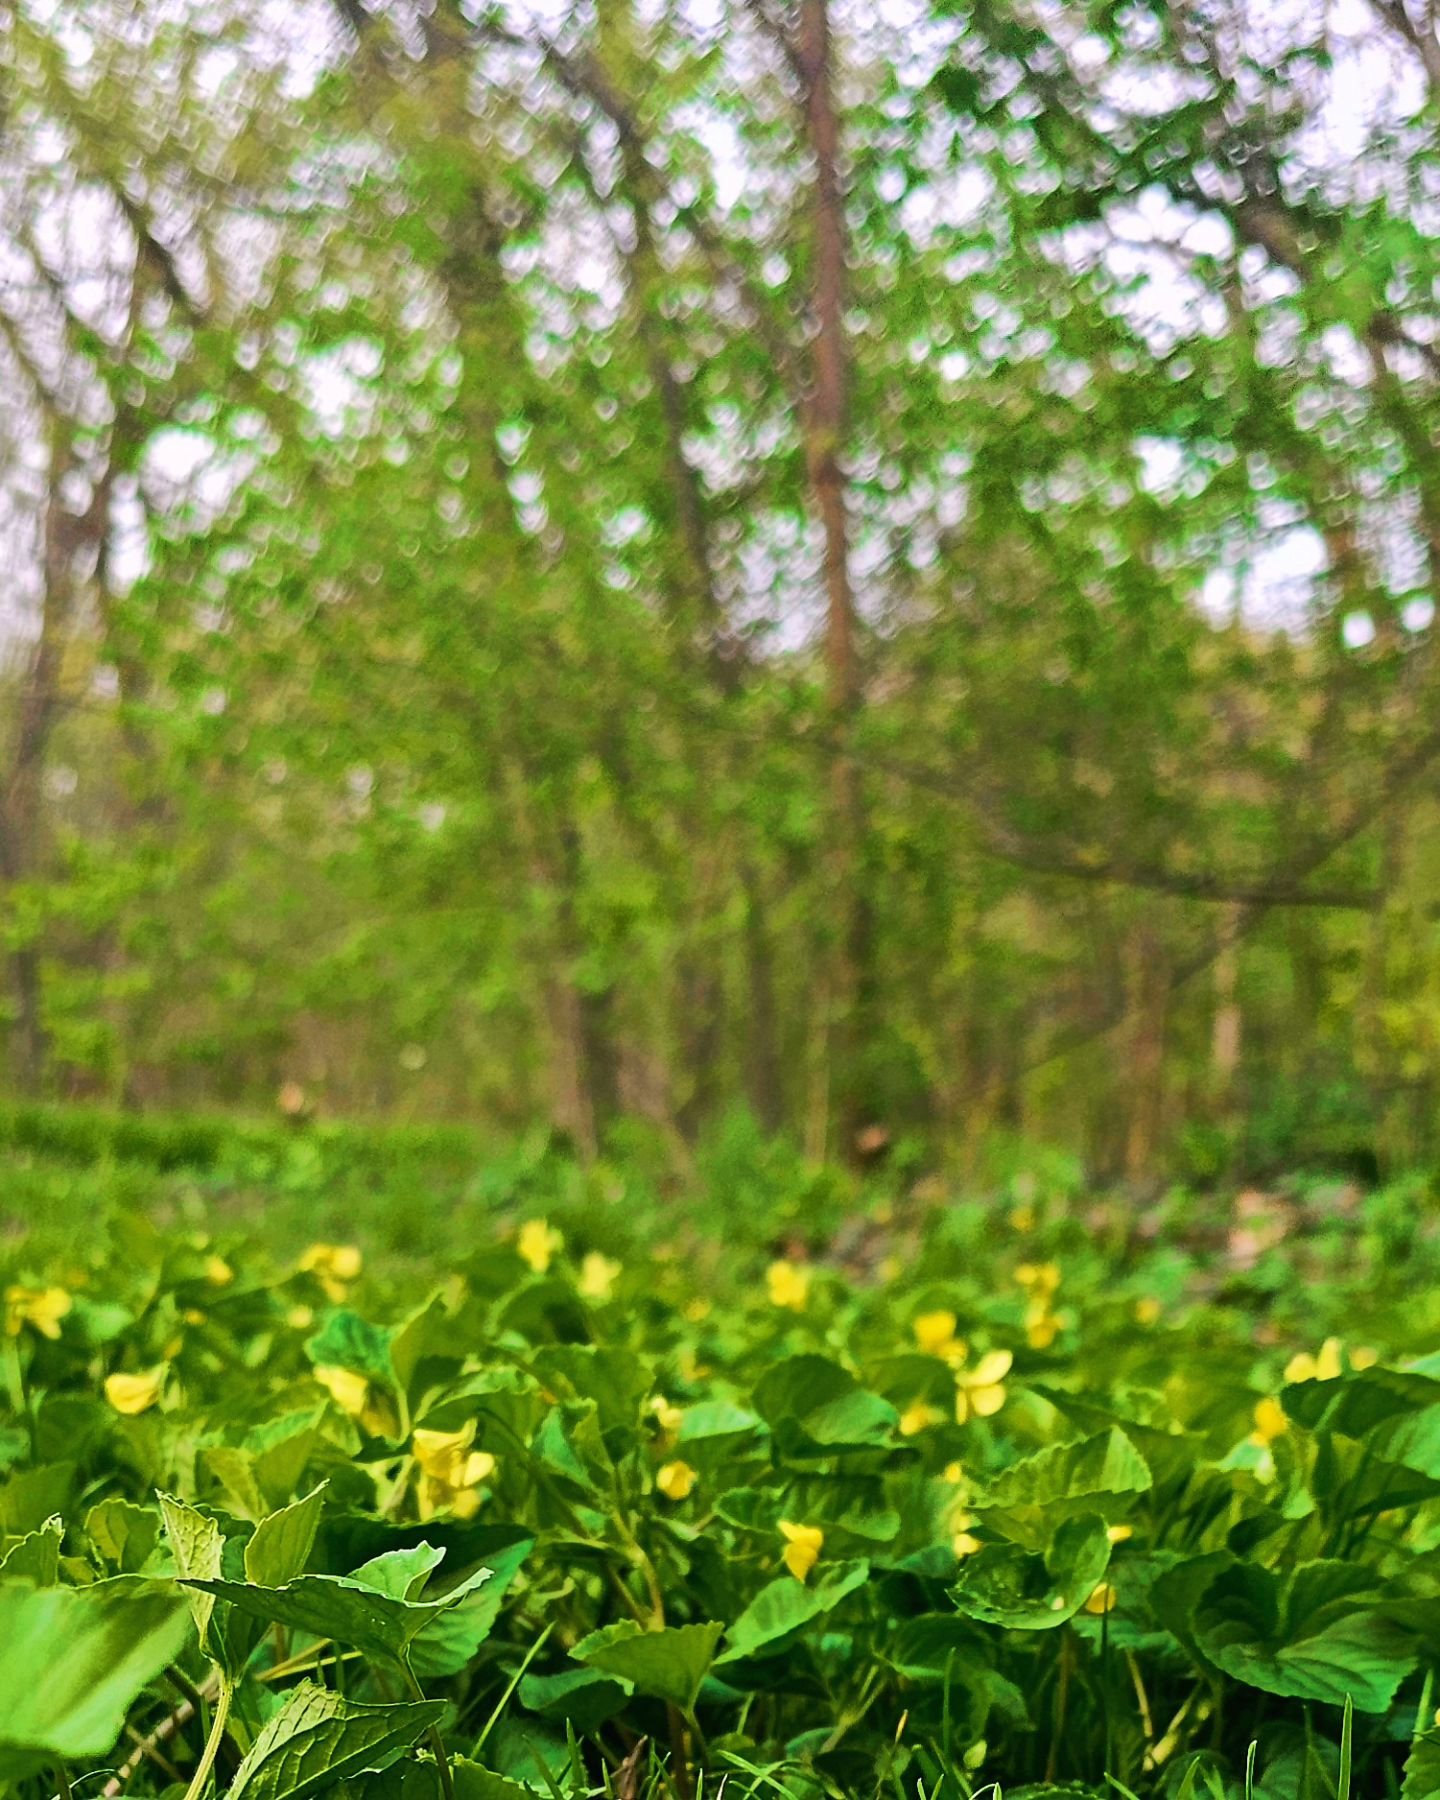 Happy Earth Day. Yellow violets in my yard. #earthday #backyardflowers #flowers #flowersofinstagram #spring #springflowers #yellowviolet #naturalhome #lovethepark